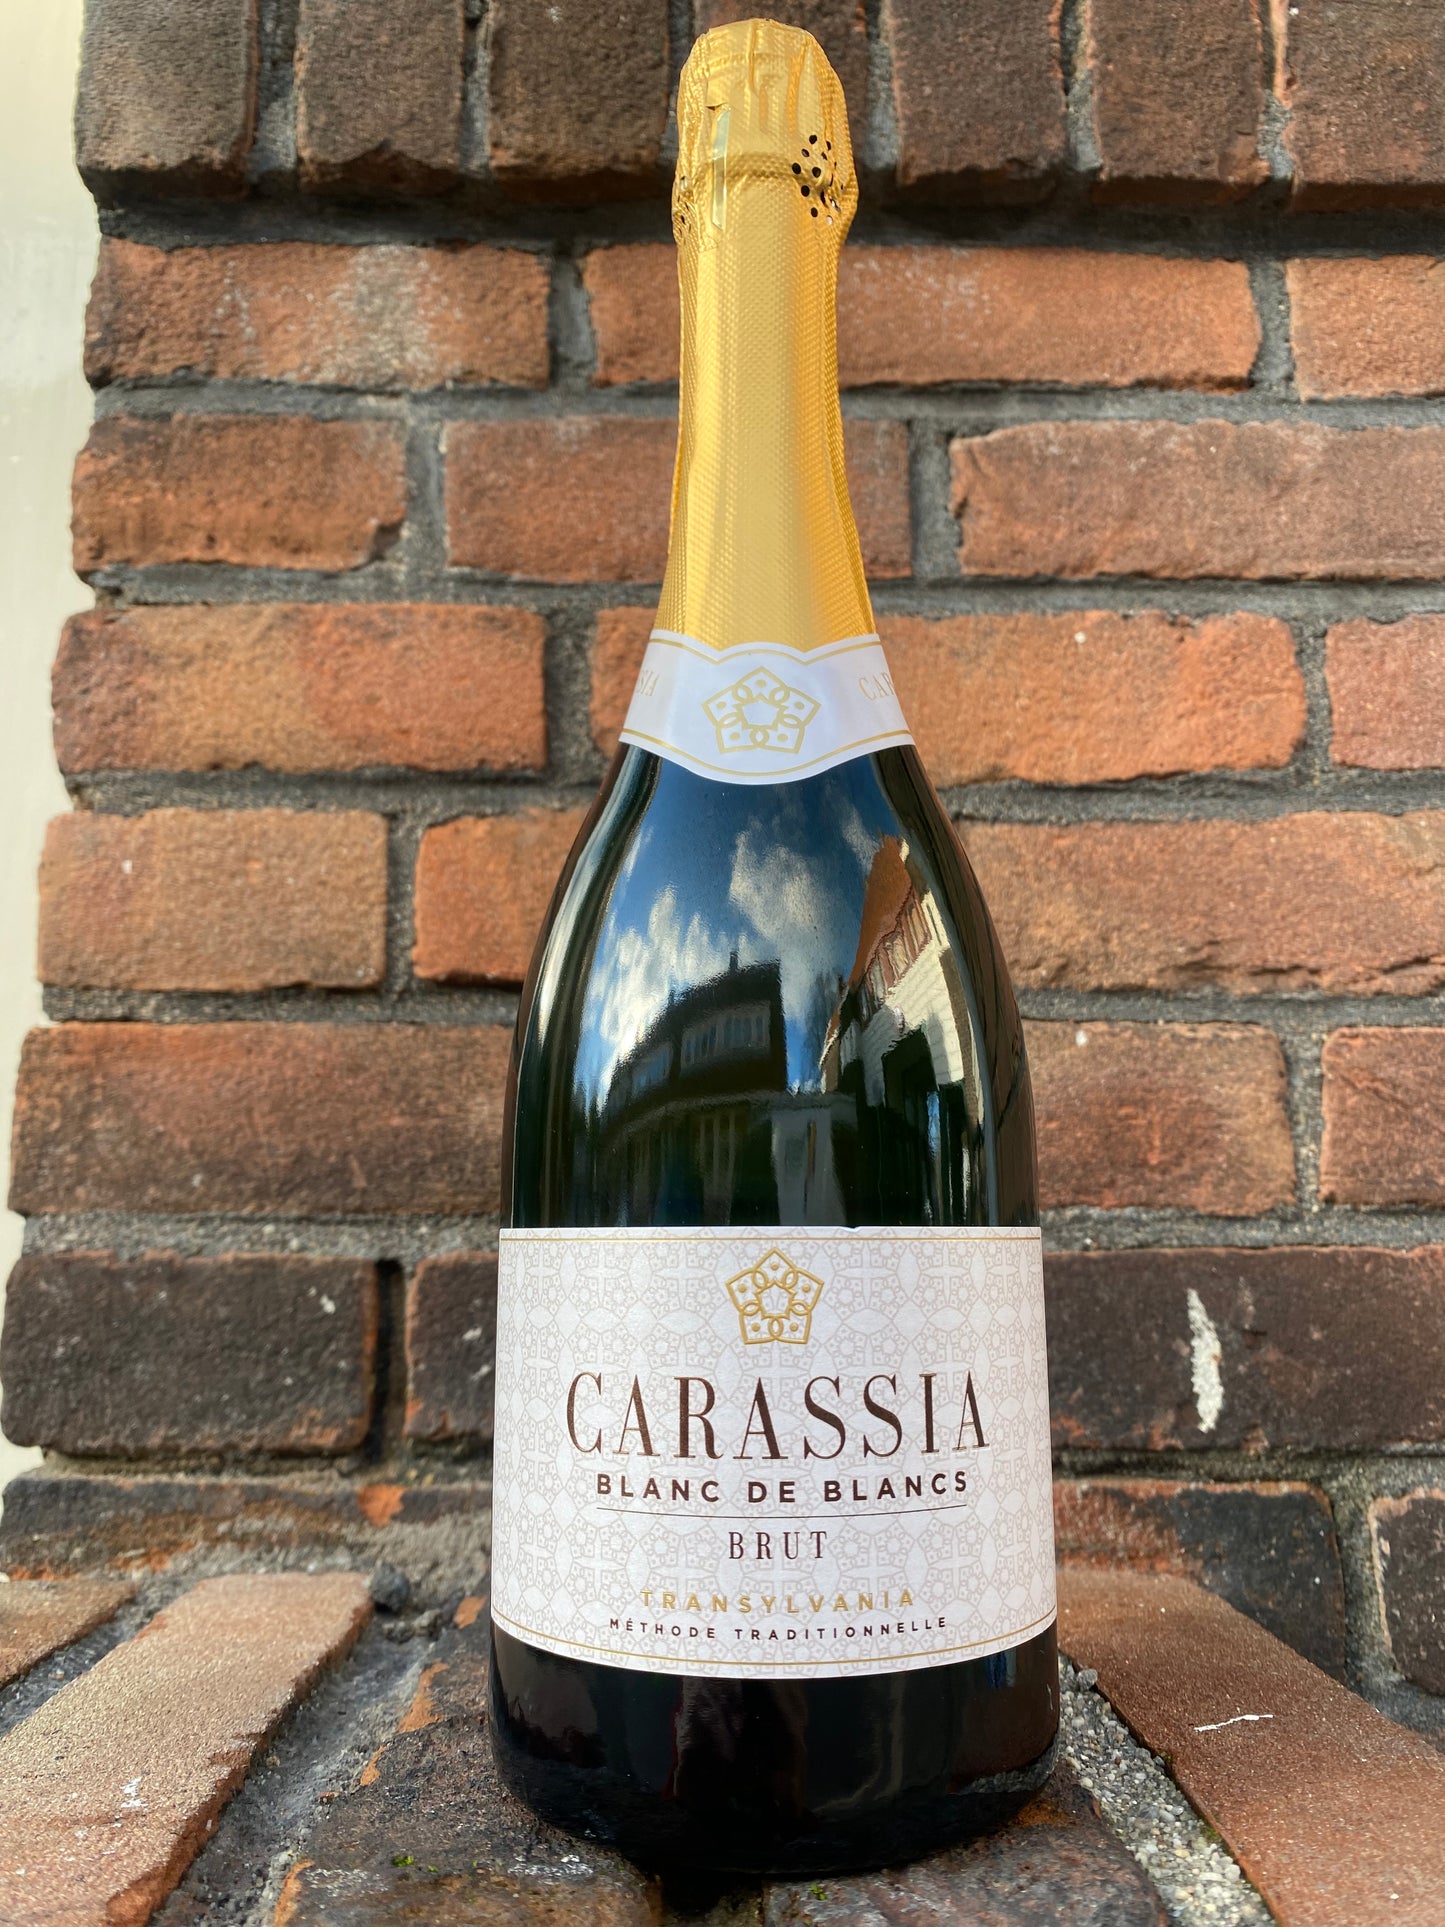 Carastelec Winery-Carassia Blanc de Blancs-Brut